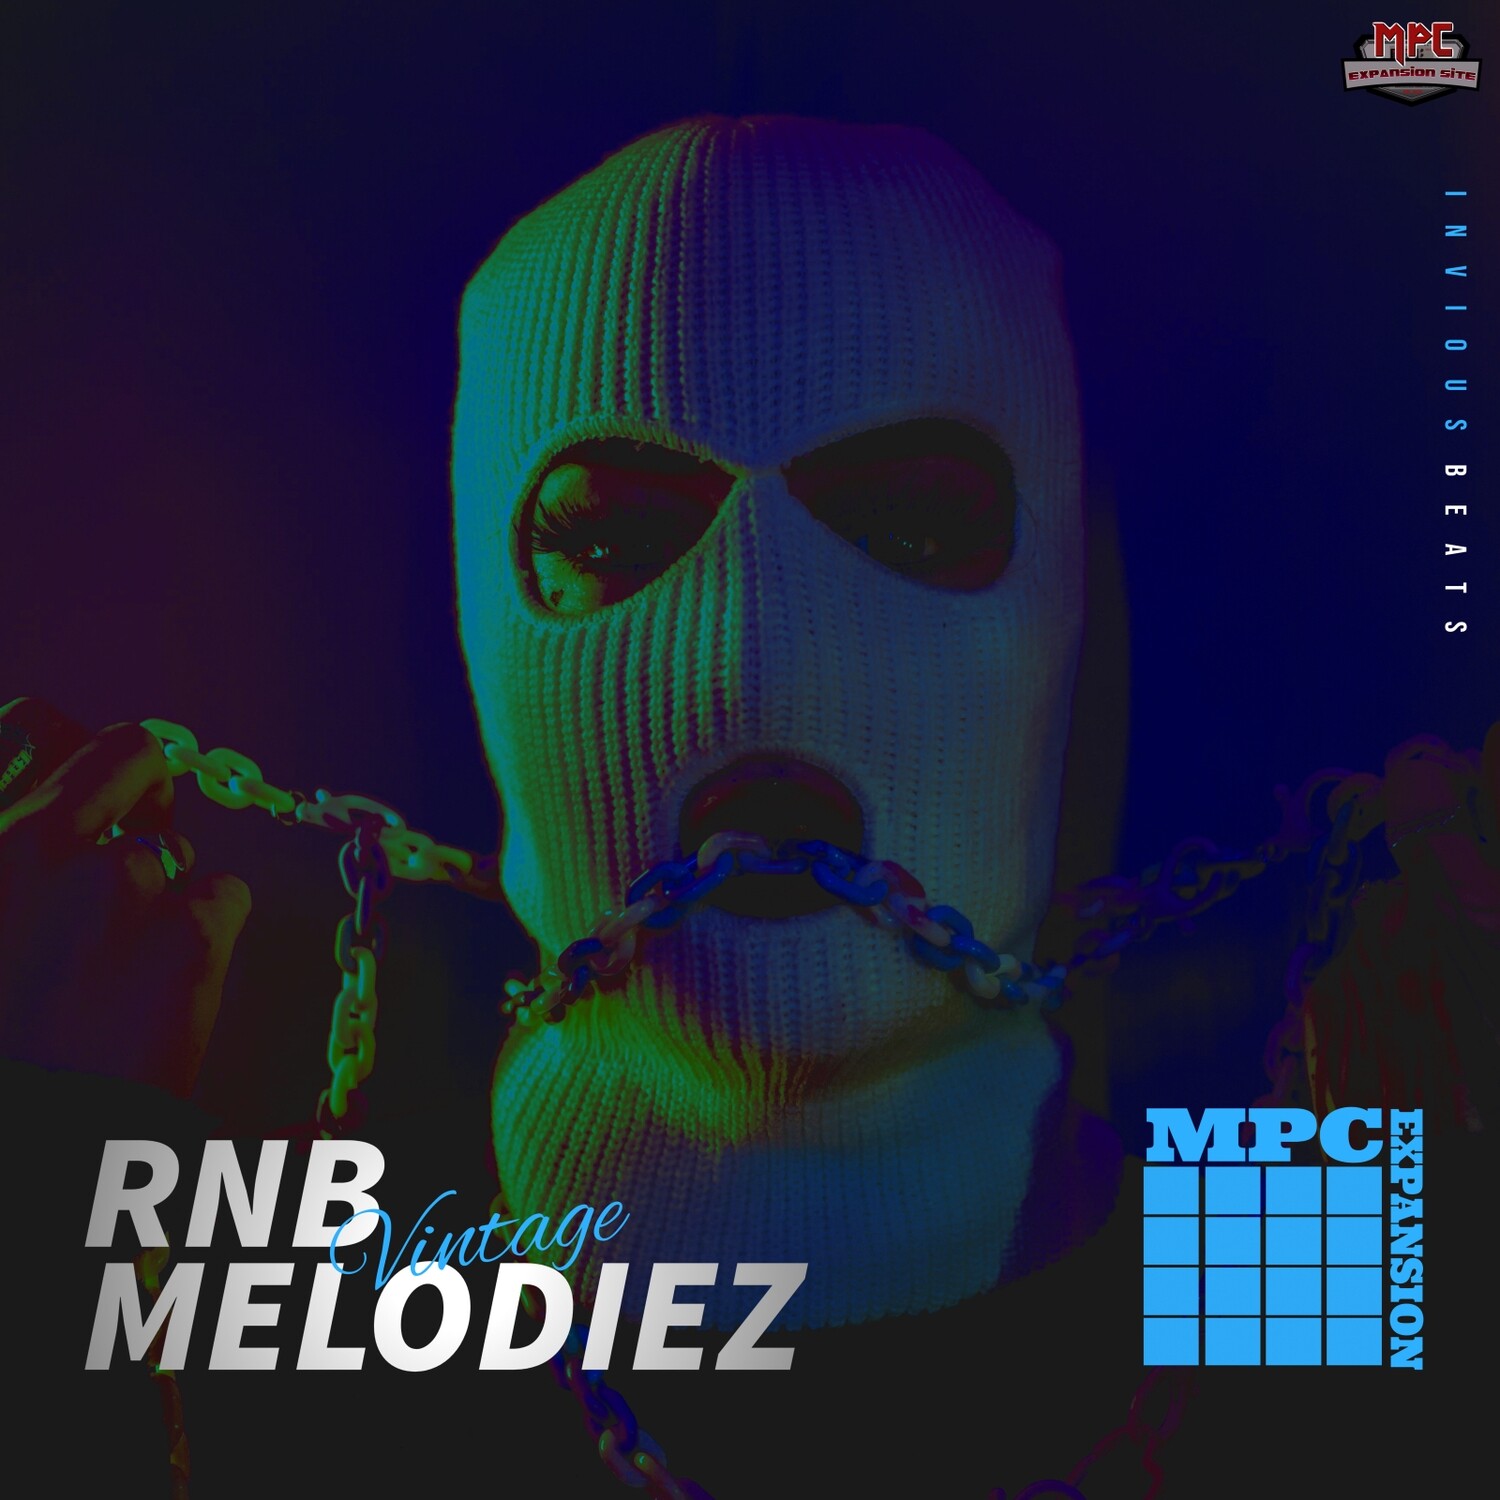 MPC EXPANSION 'RNB VINTAGE MELODIEZ' by INVIOUS + MIDI KIT